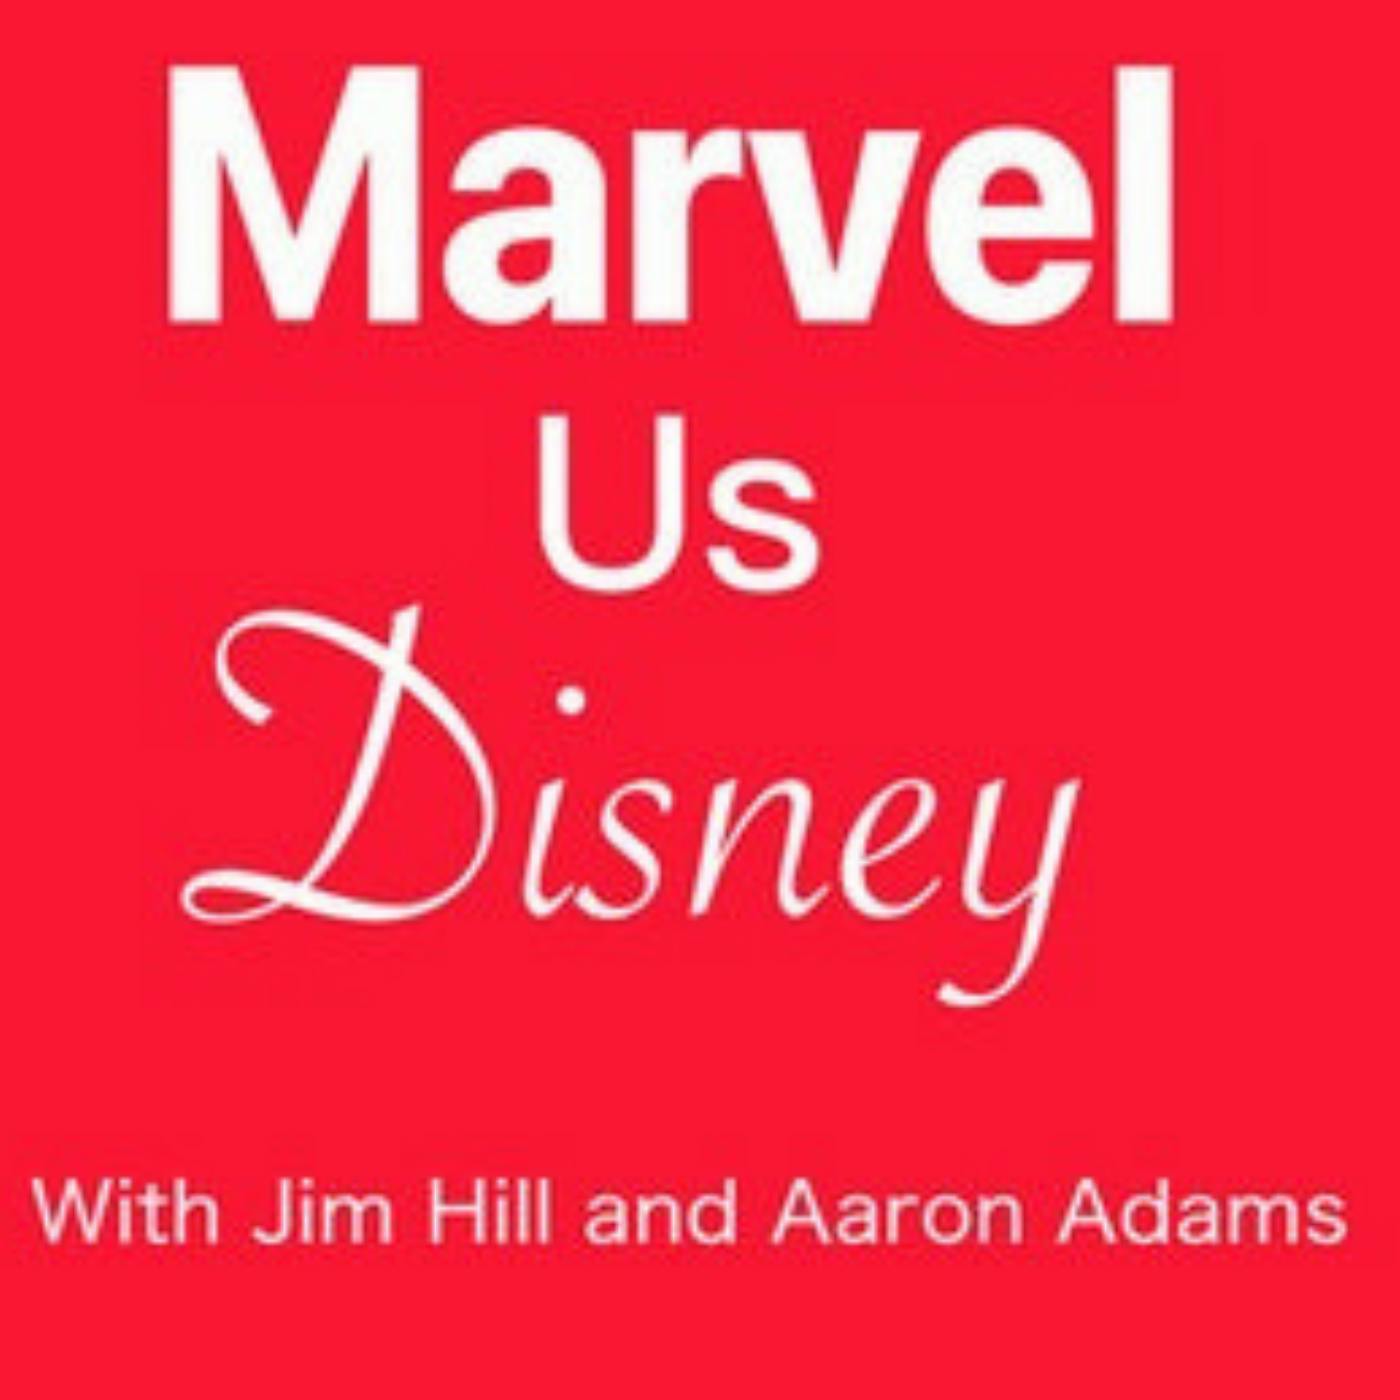 Marvel Us Disney Episode 92: Get ready for “Disney’s Hotel New York -- The Art of Marvel”